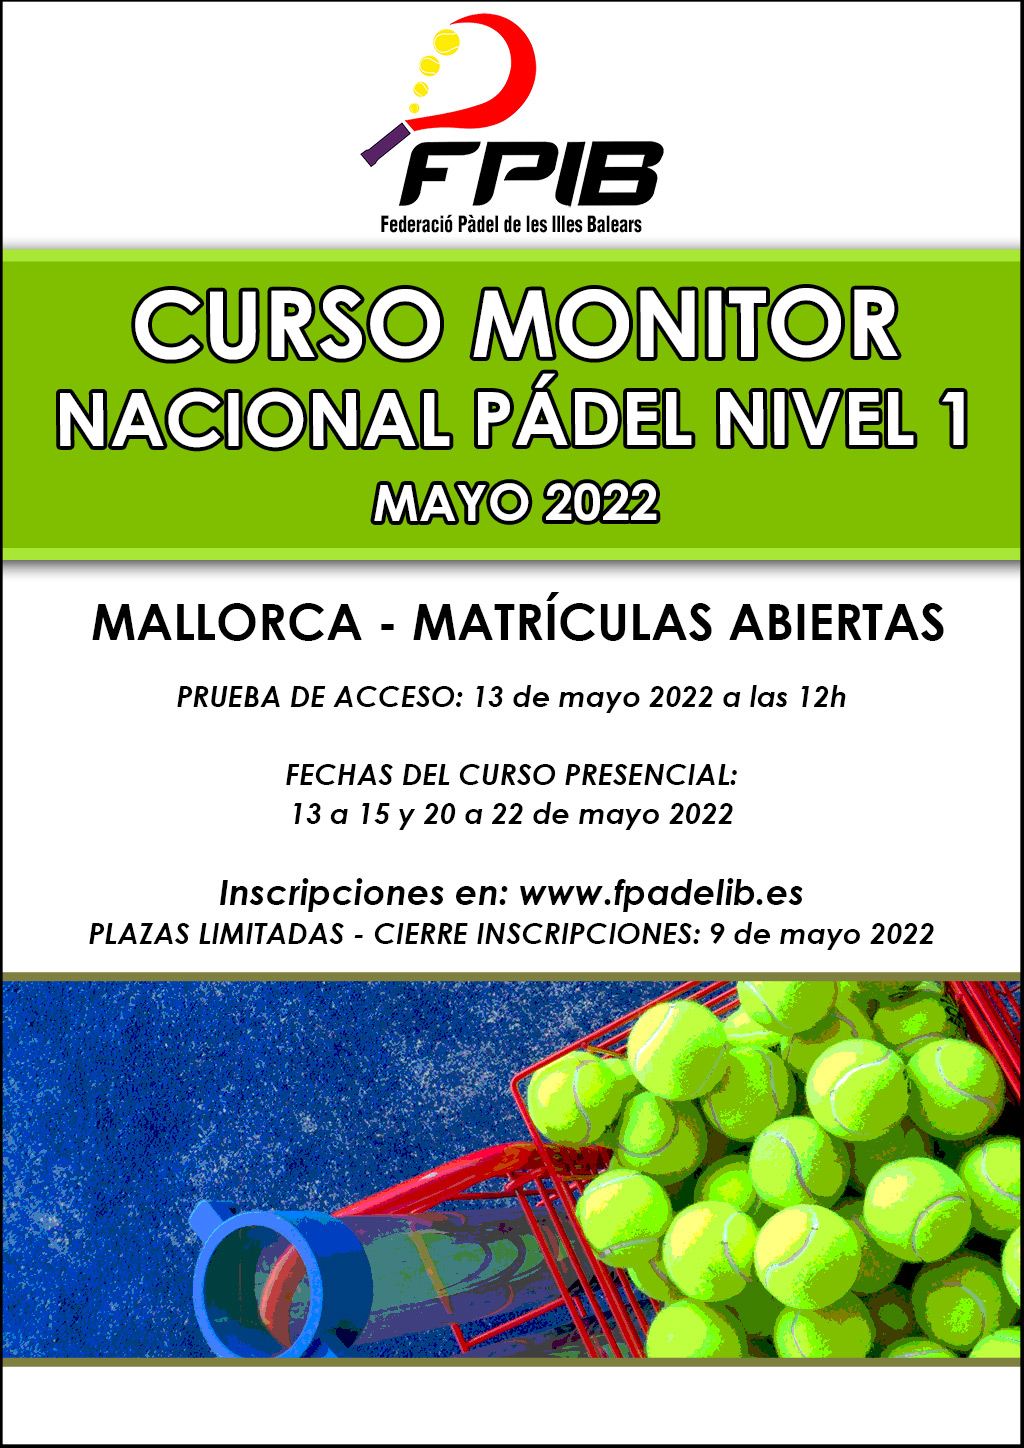 2022 Curso monitor Mallorca mayo